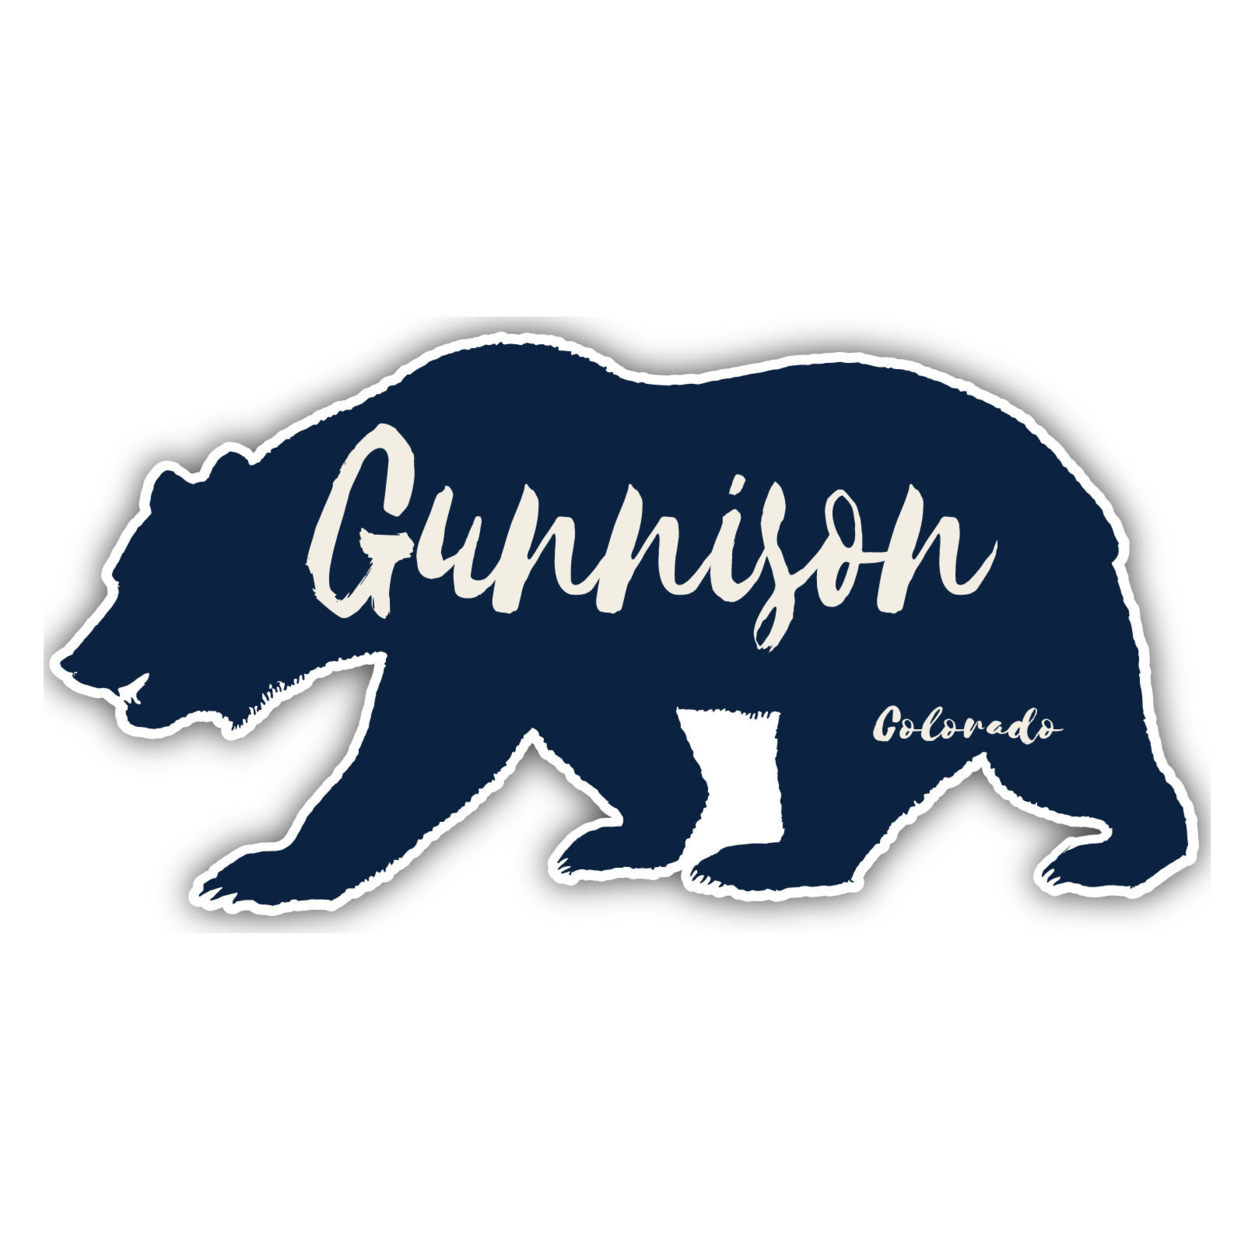 Gunnison Colorado Souvenir Decorative Stickers (Choose Theme And Size) - 4-Pack, 4-Inch, Tent